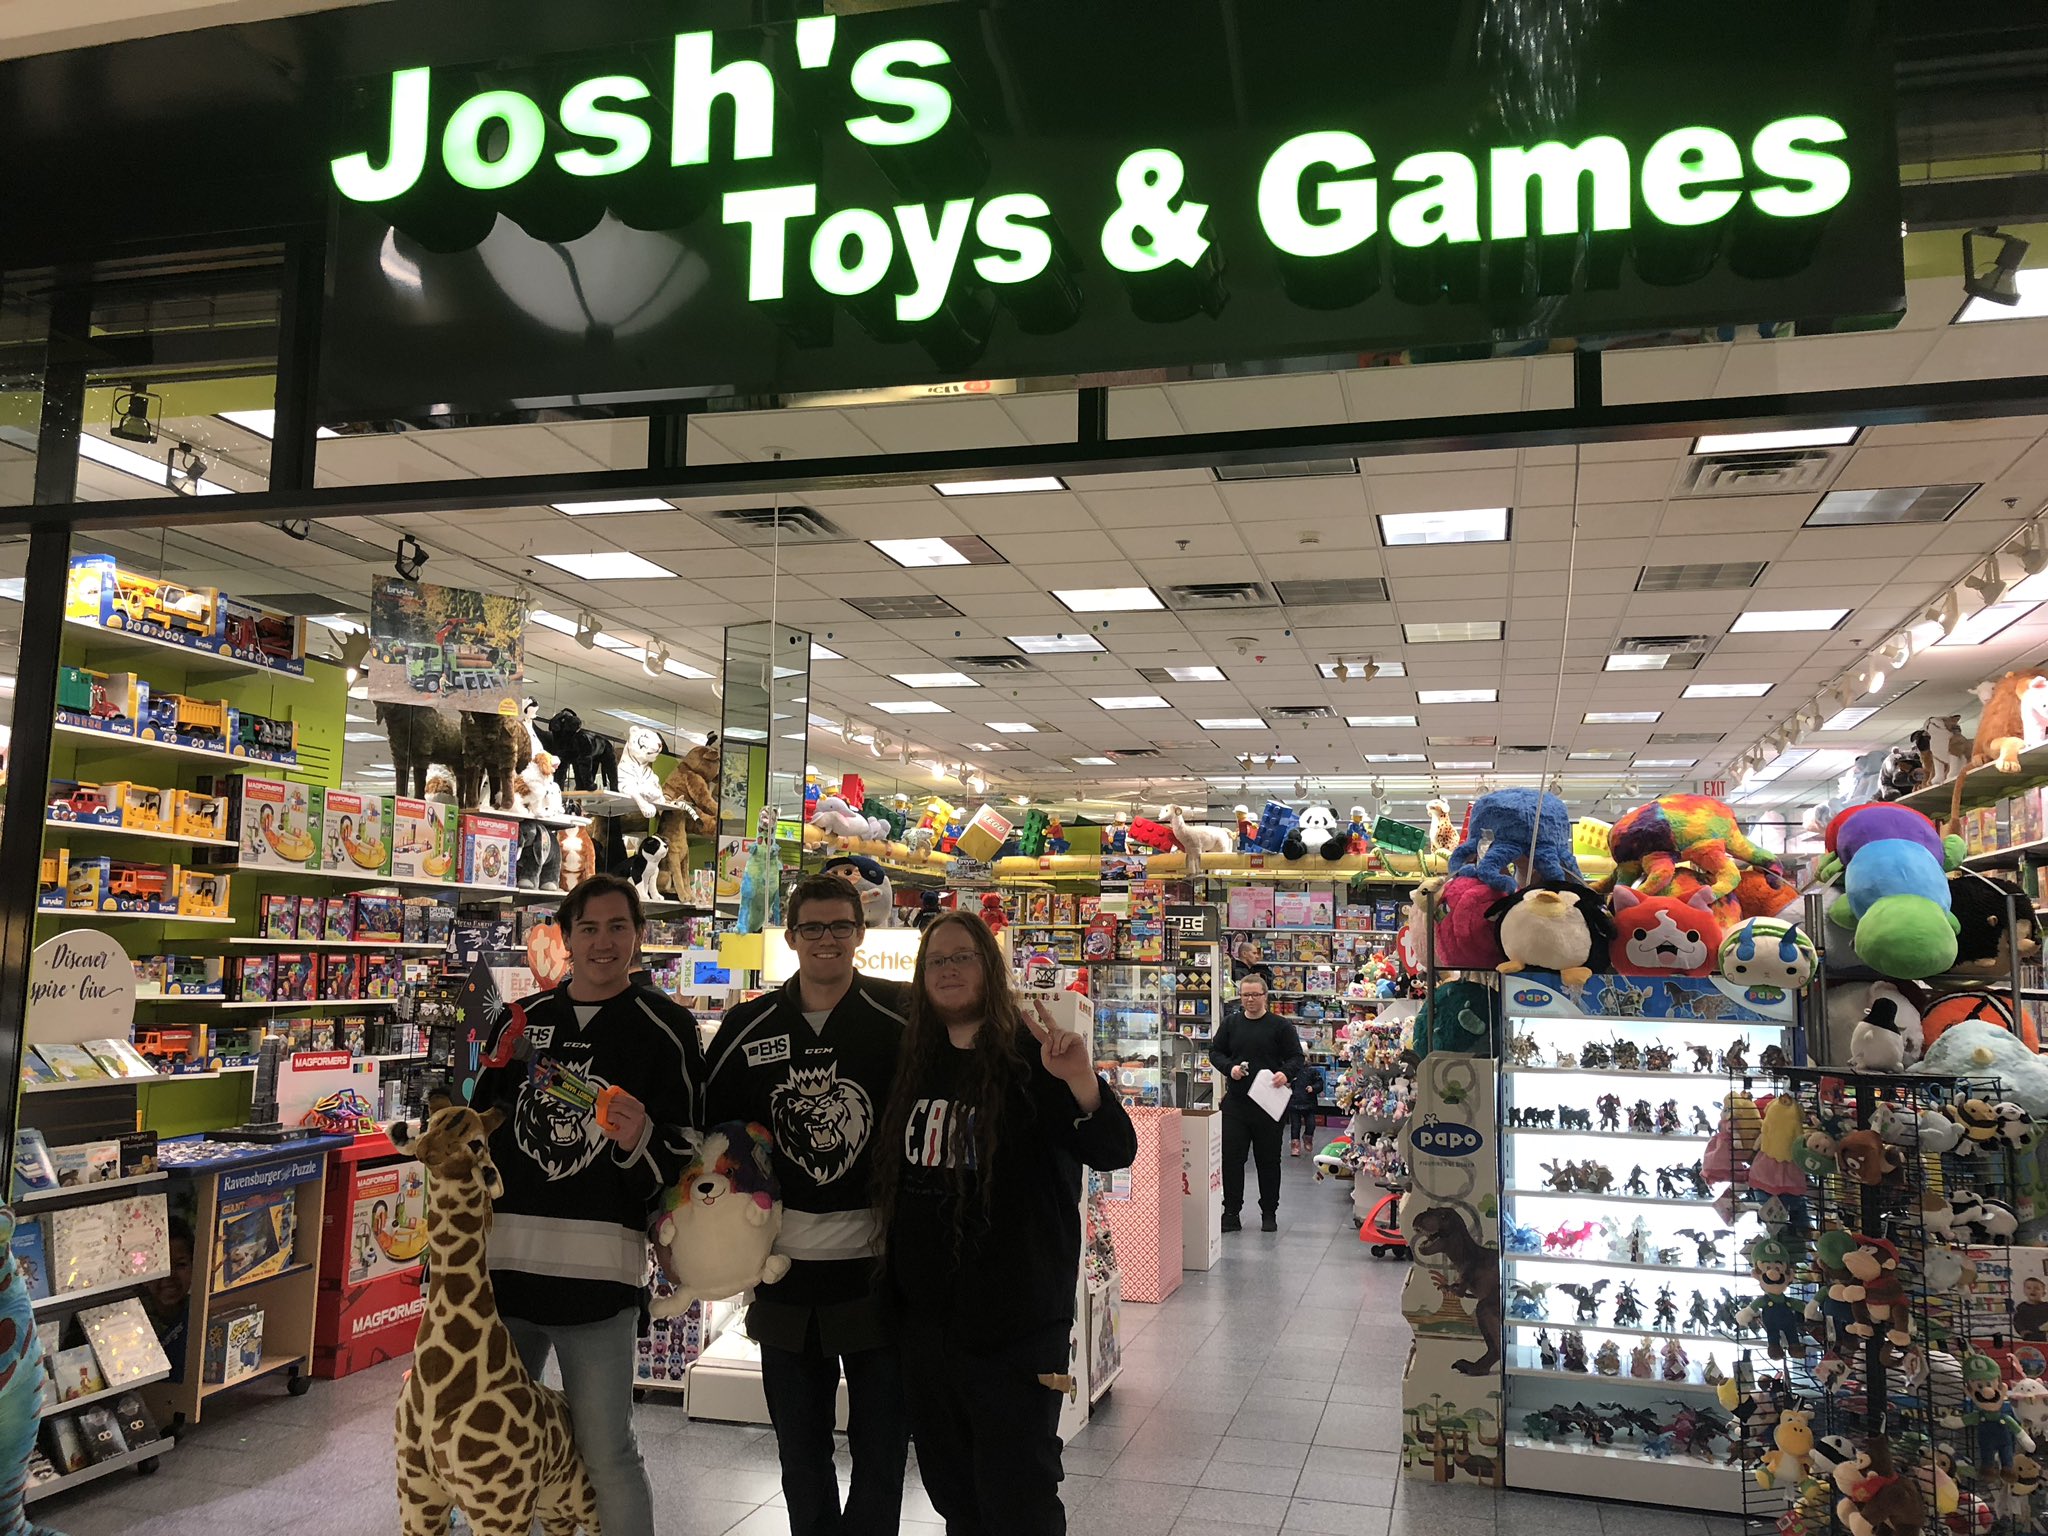 josh's toys & games